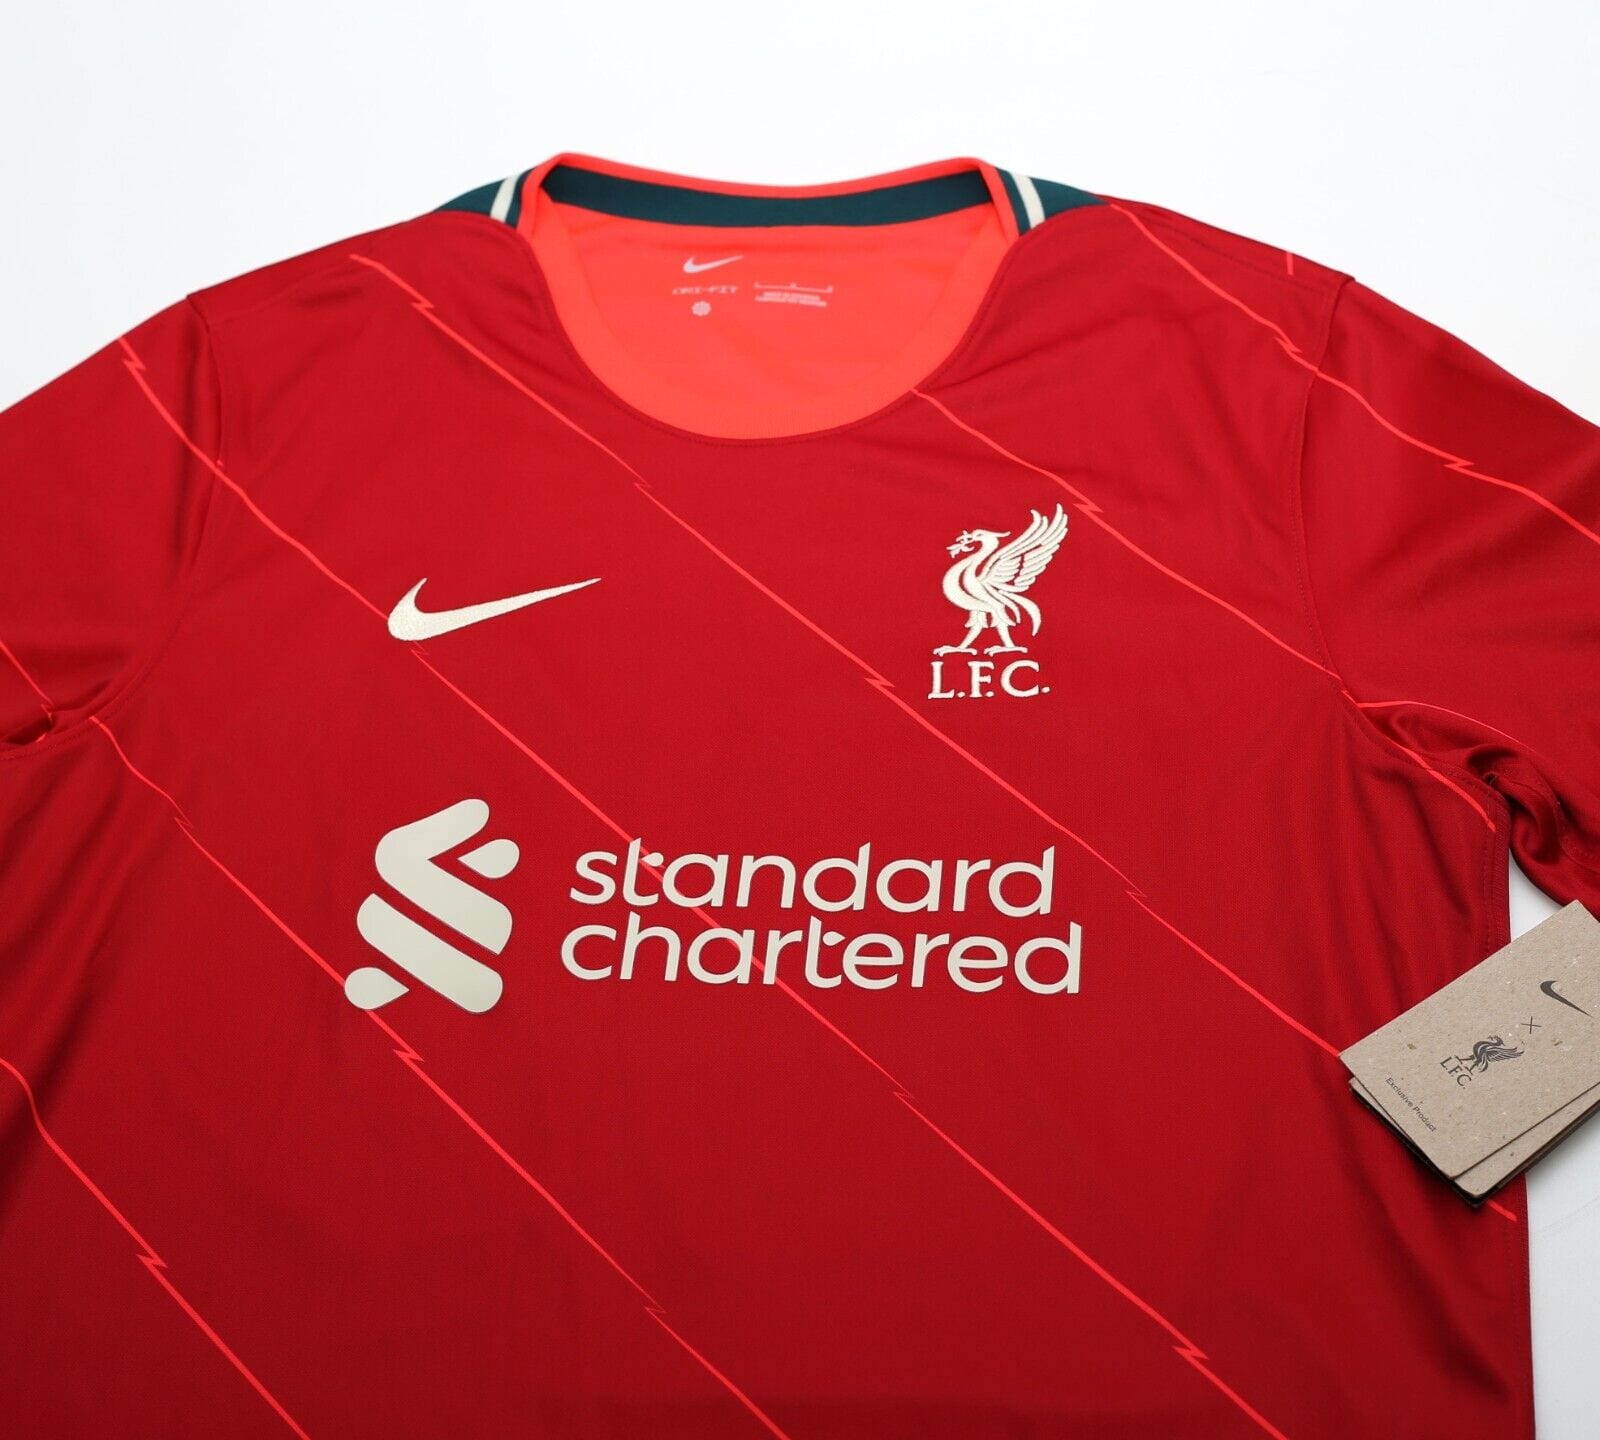 2021/22 ROBERTSON #26 Liverpool Vintage Nike Home Football Shirt (L) BNWT